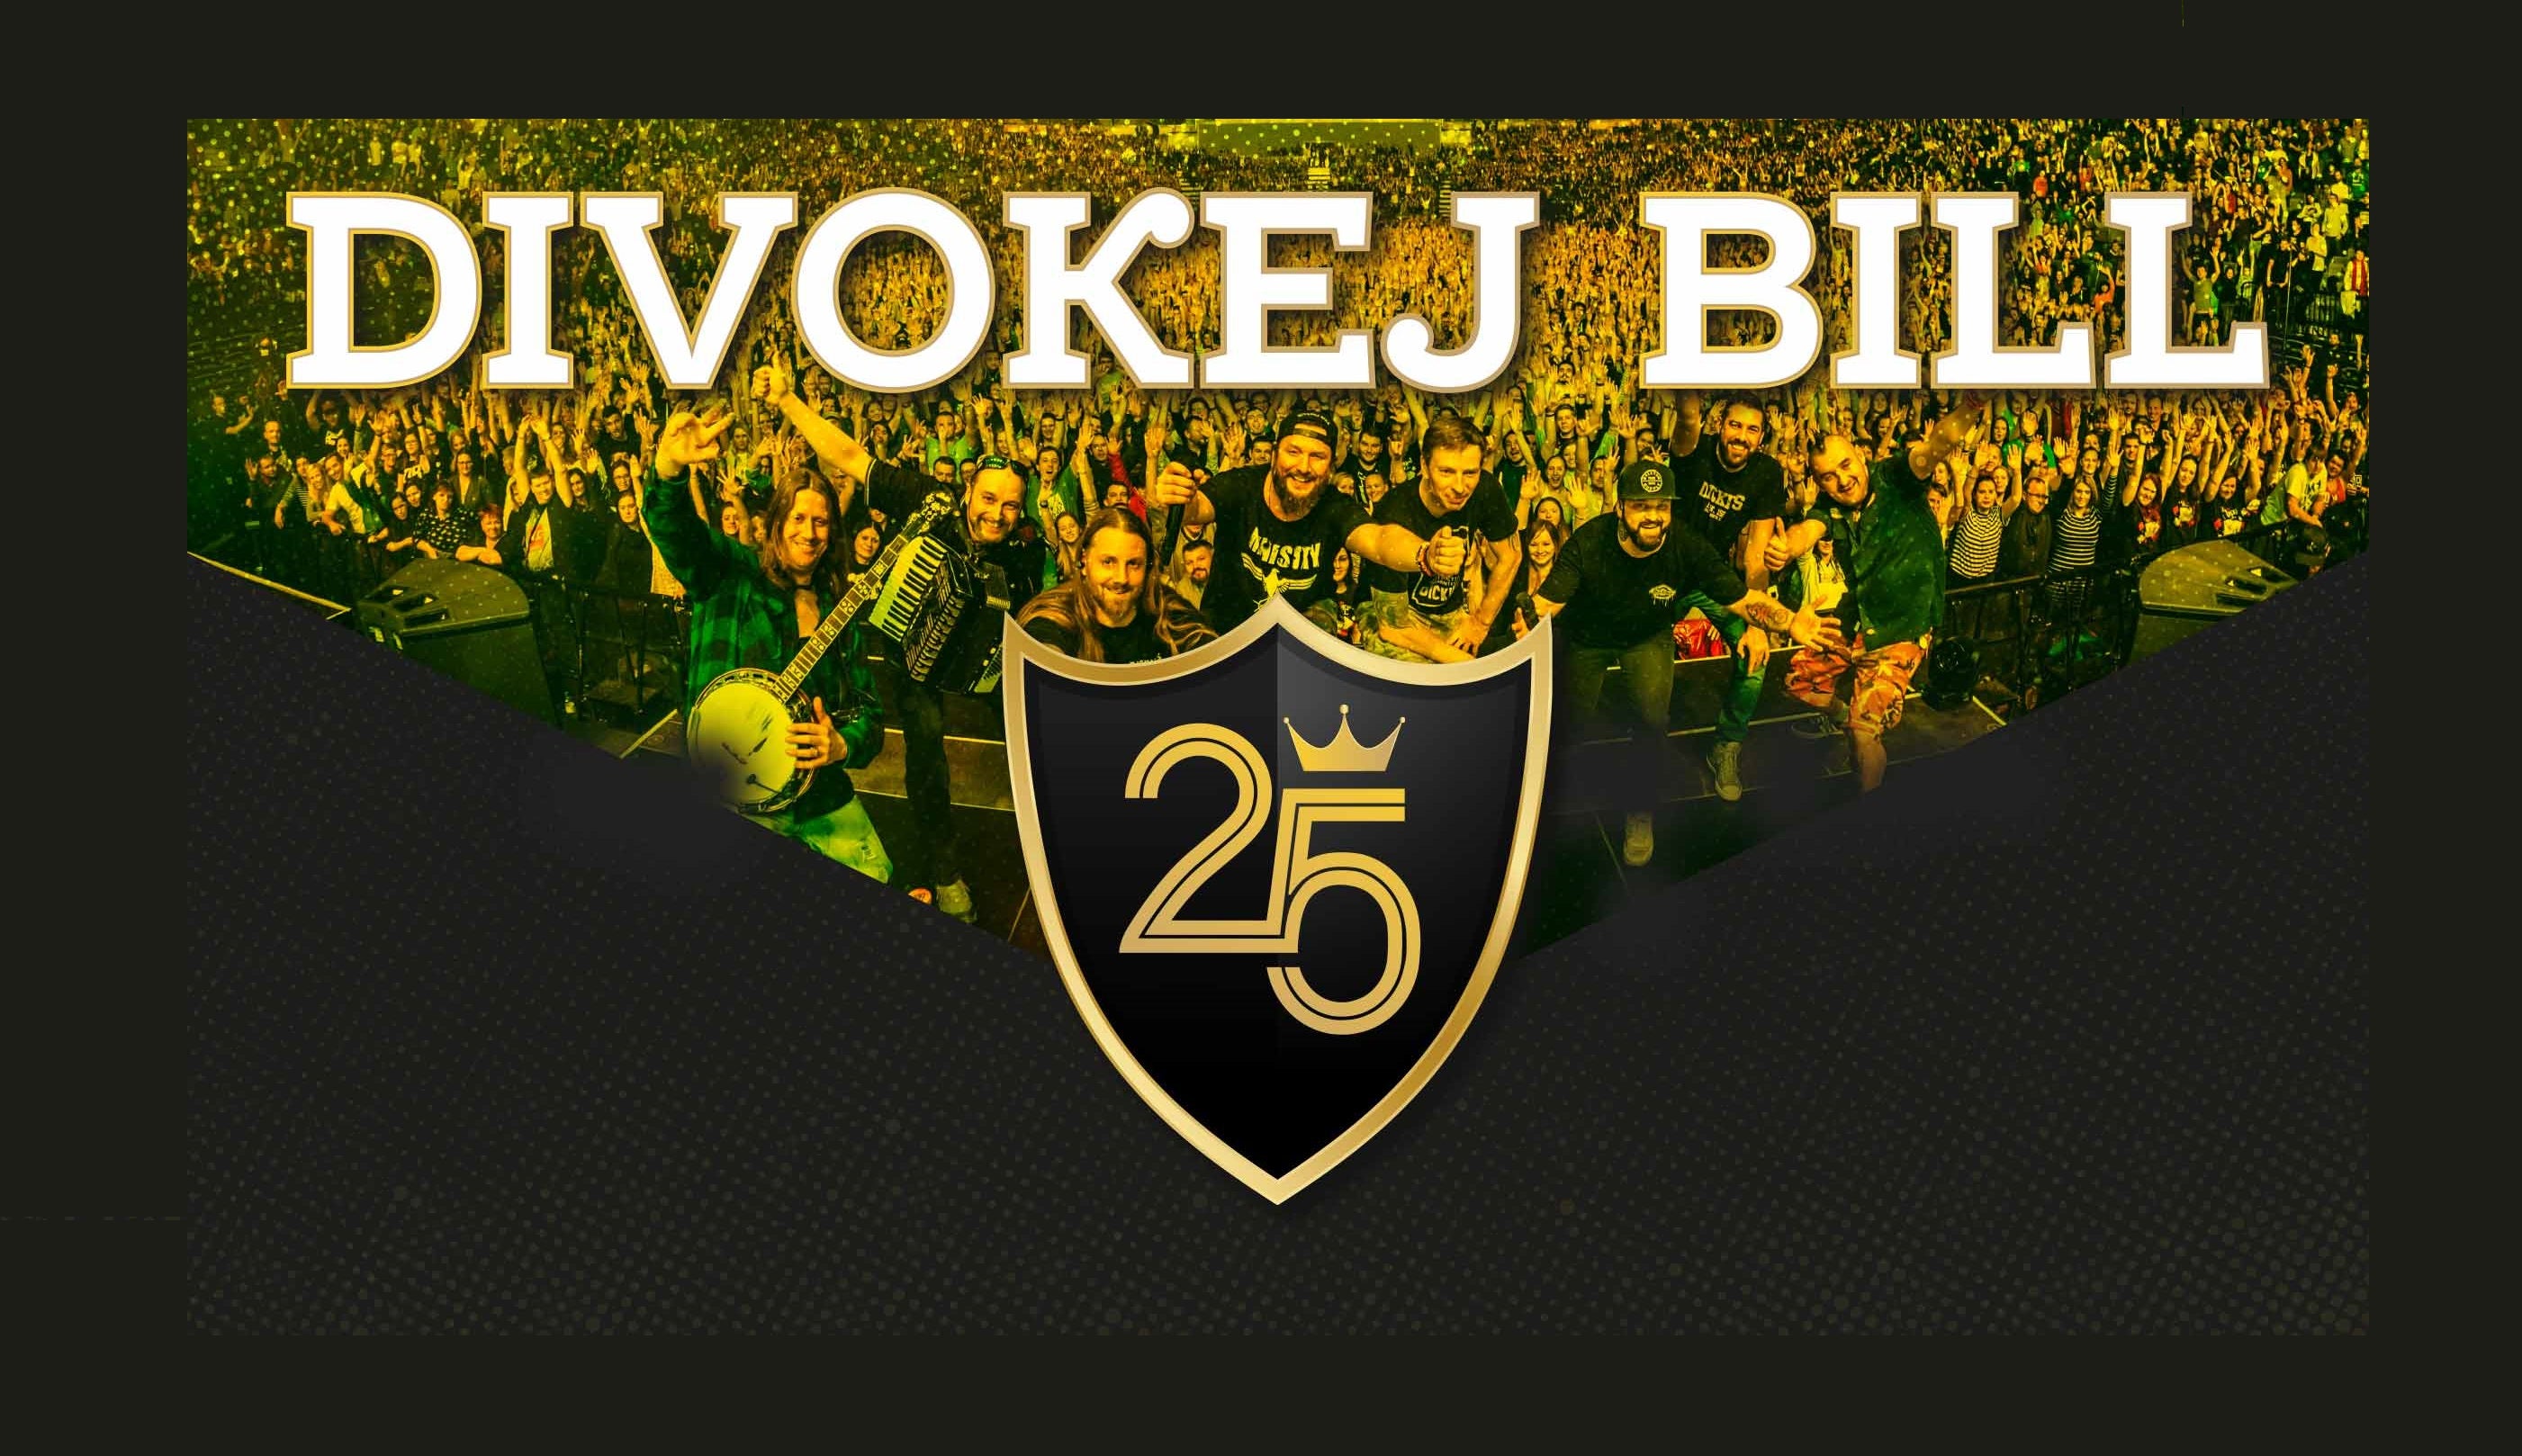 Divokej Bill- koncert Praha O2 arena- 25 let tour -O2 arena Praha 9 Českomoravská 2345/17a, Praha 9 19000